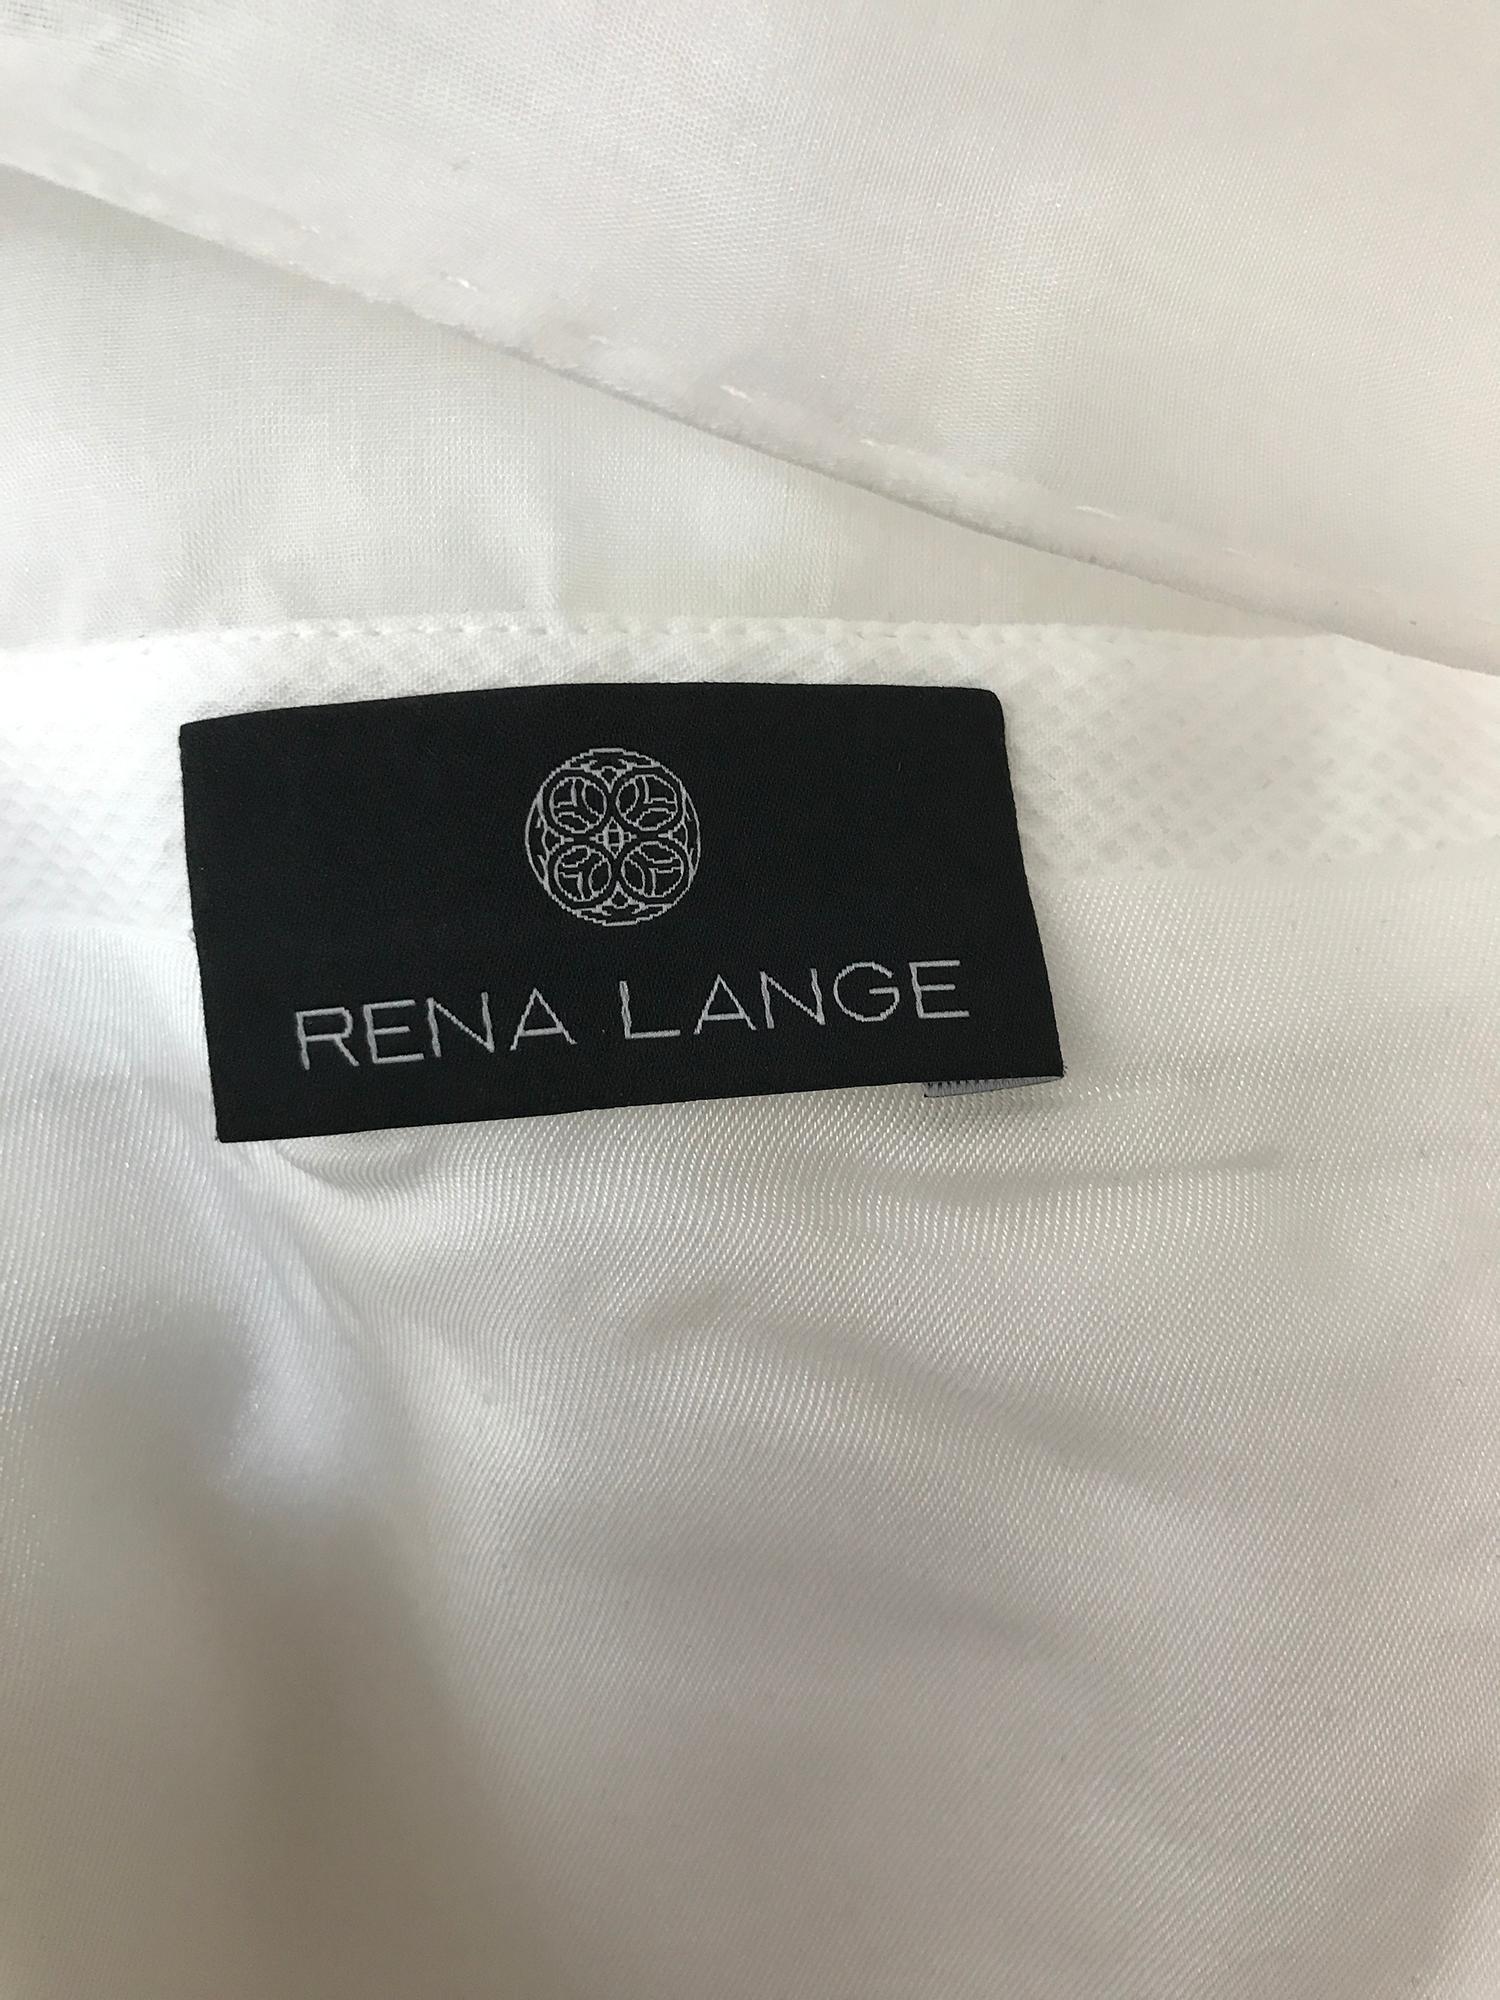 Rena Lange White Pique and Silk Organza Day Dress 14 1